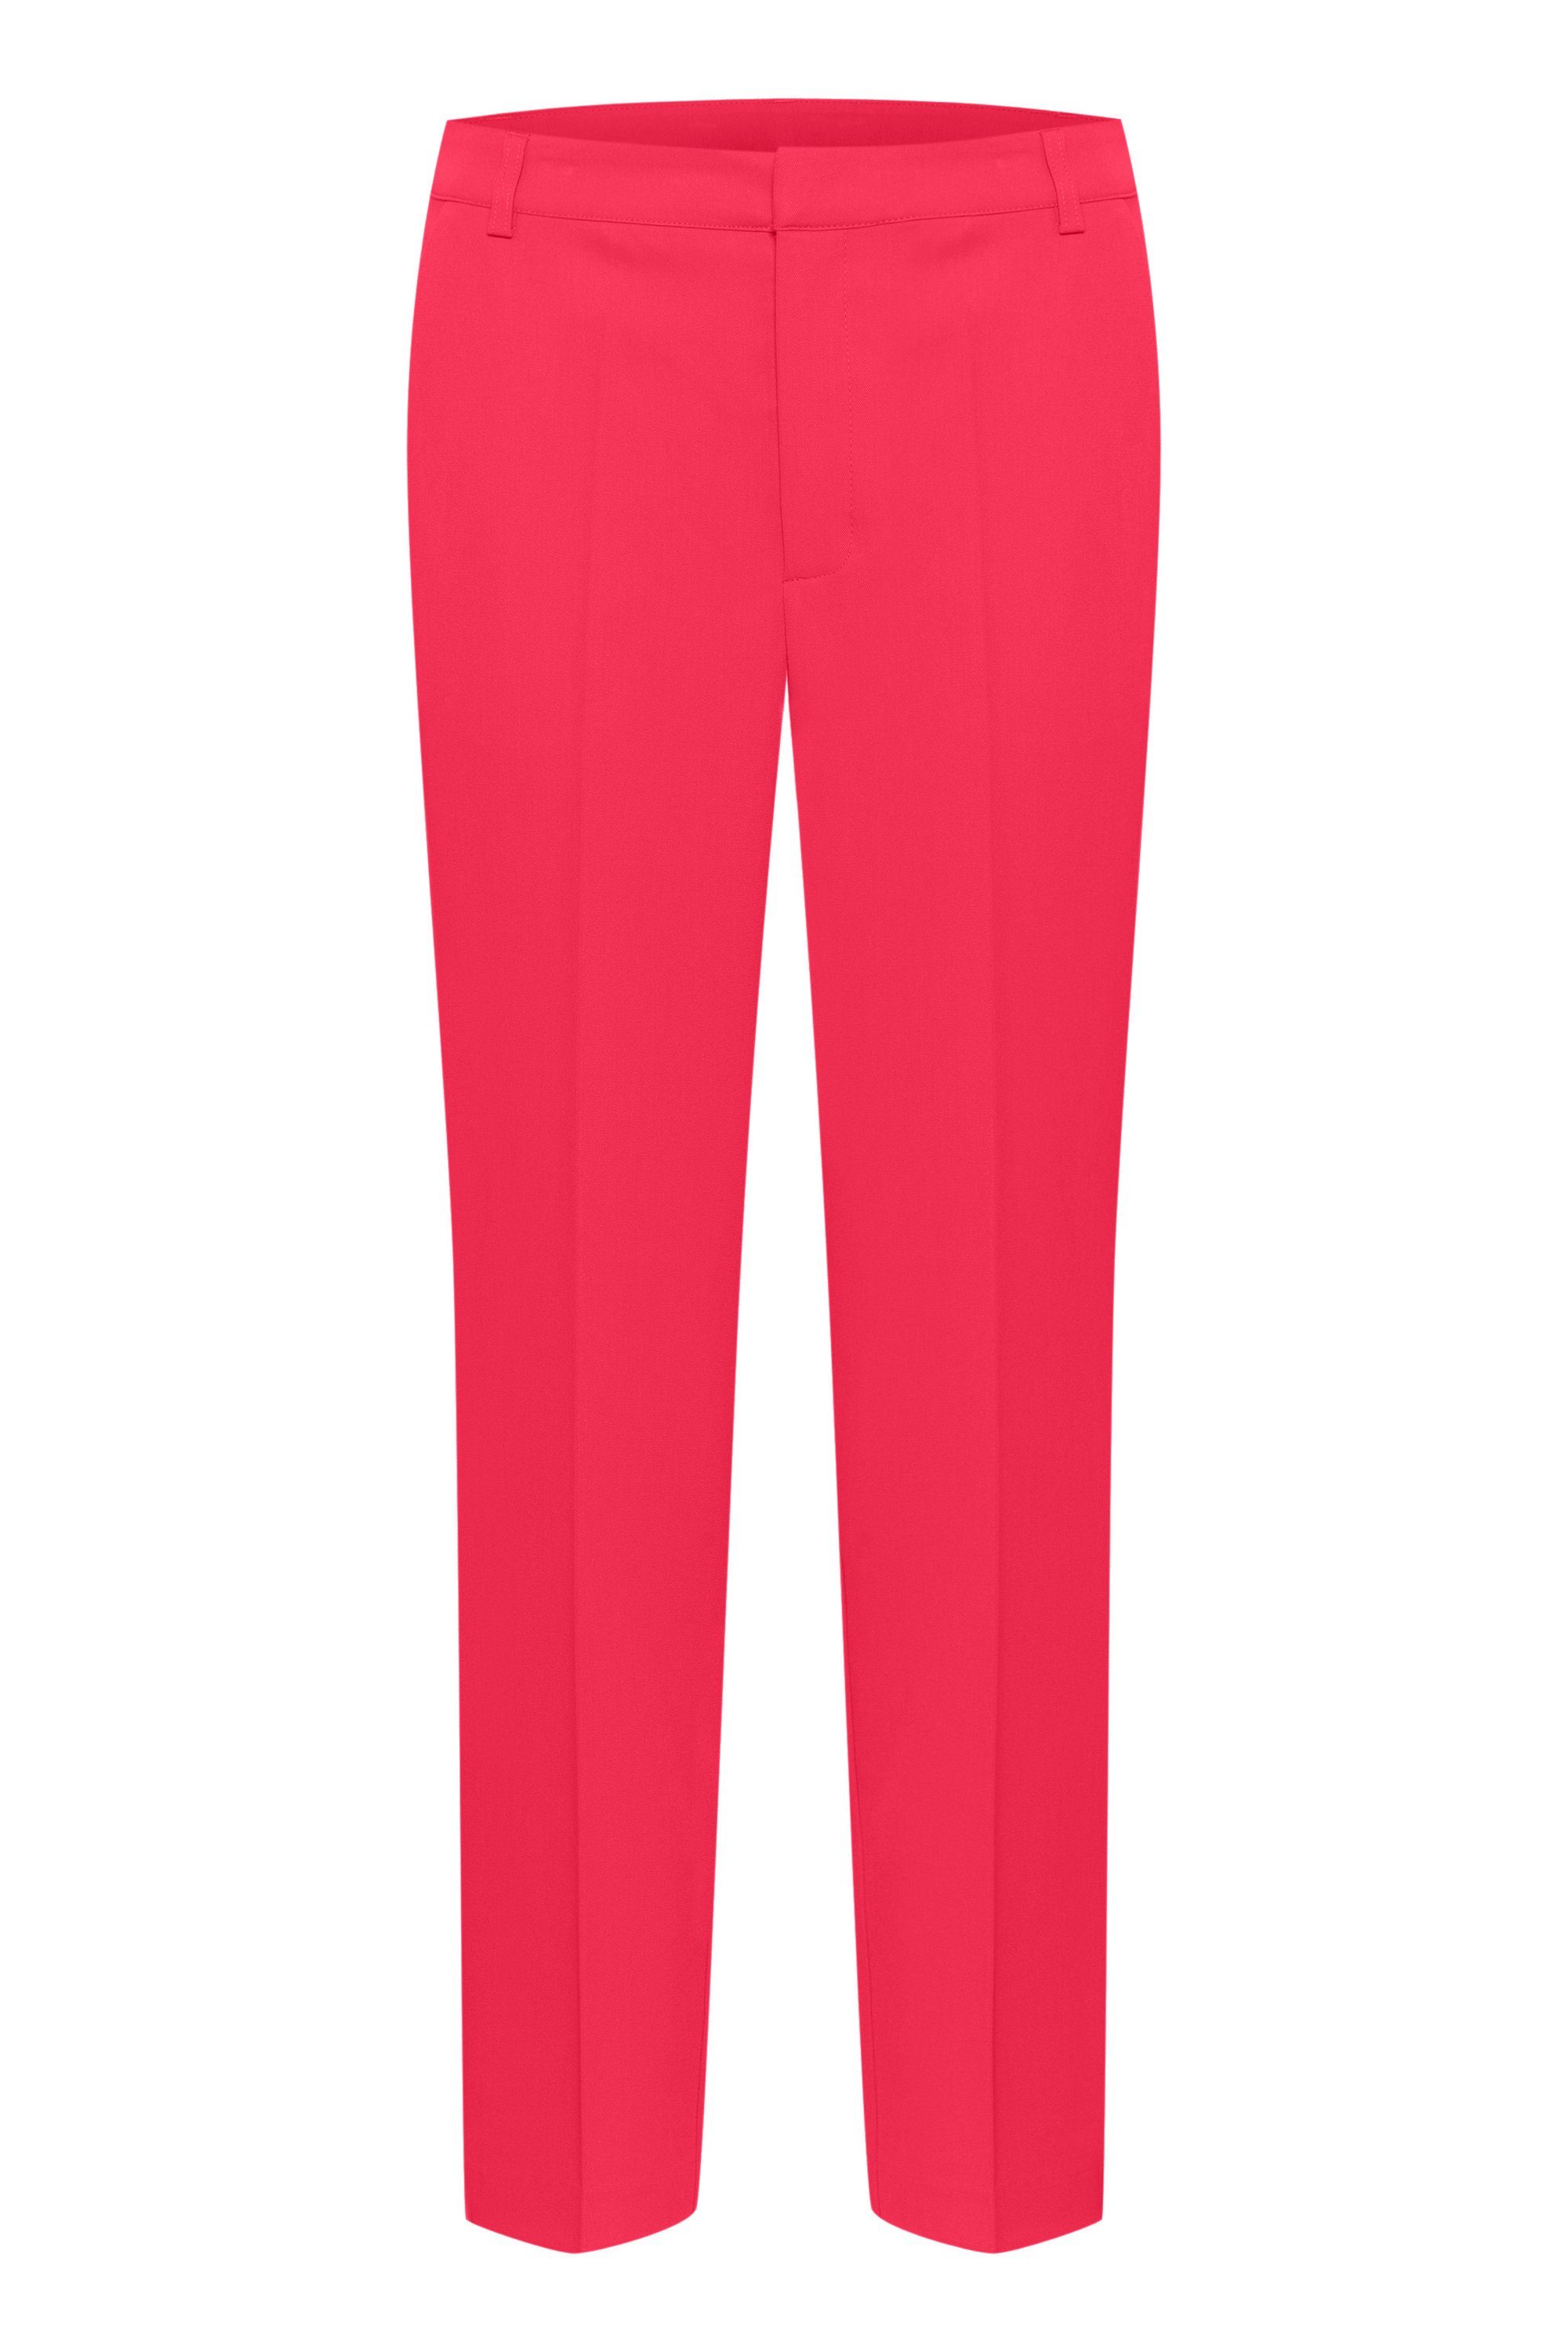 KAFFE Anzughose Suiting KAsakura Pink Pants Virtual